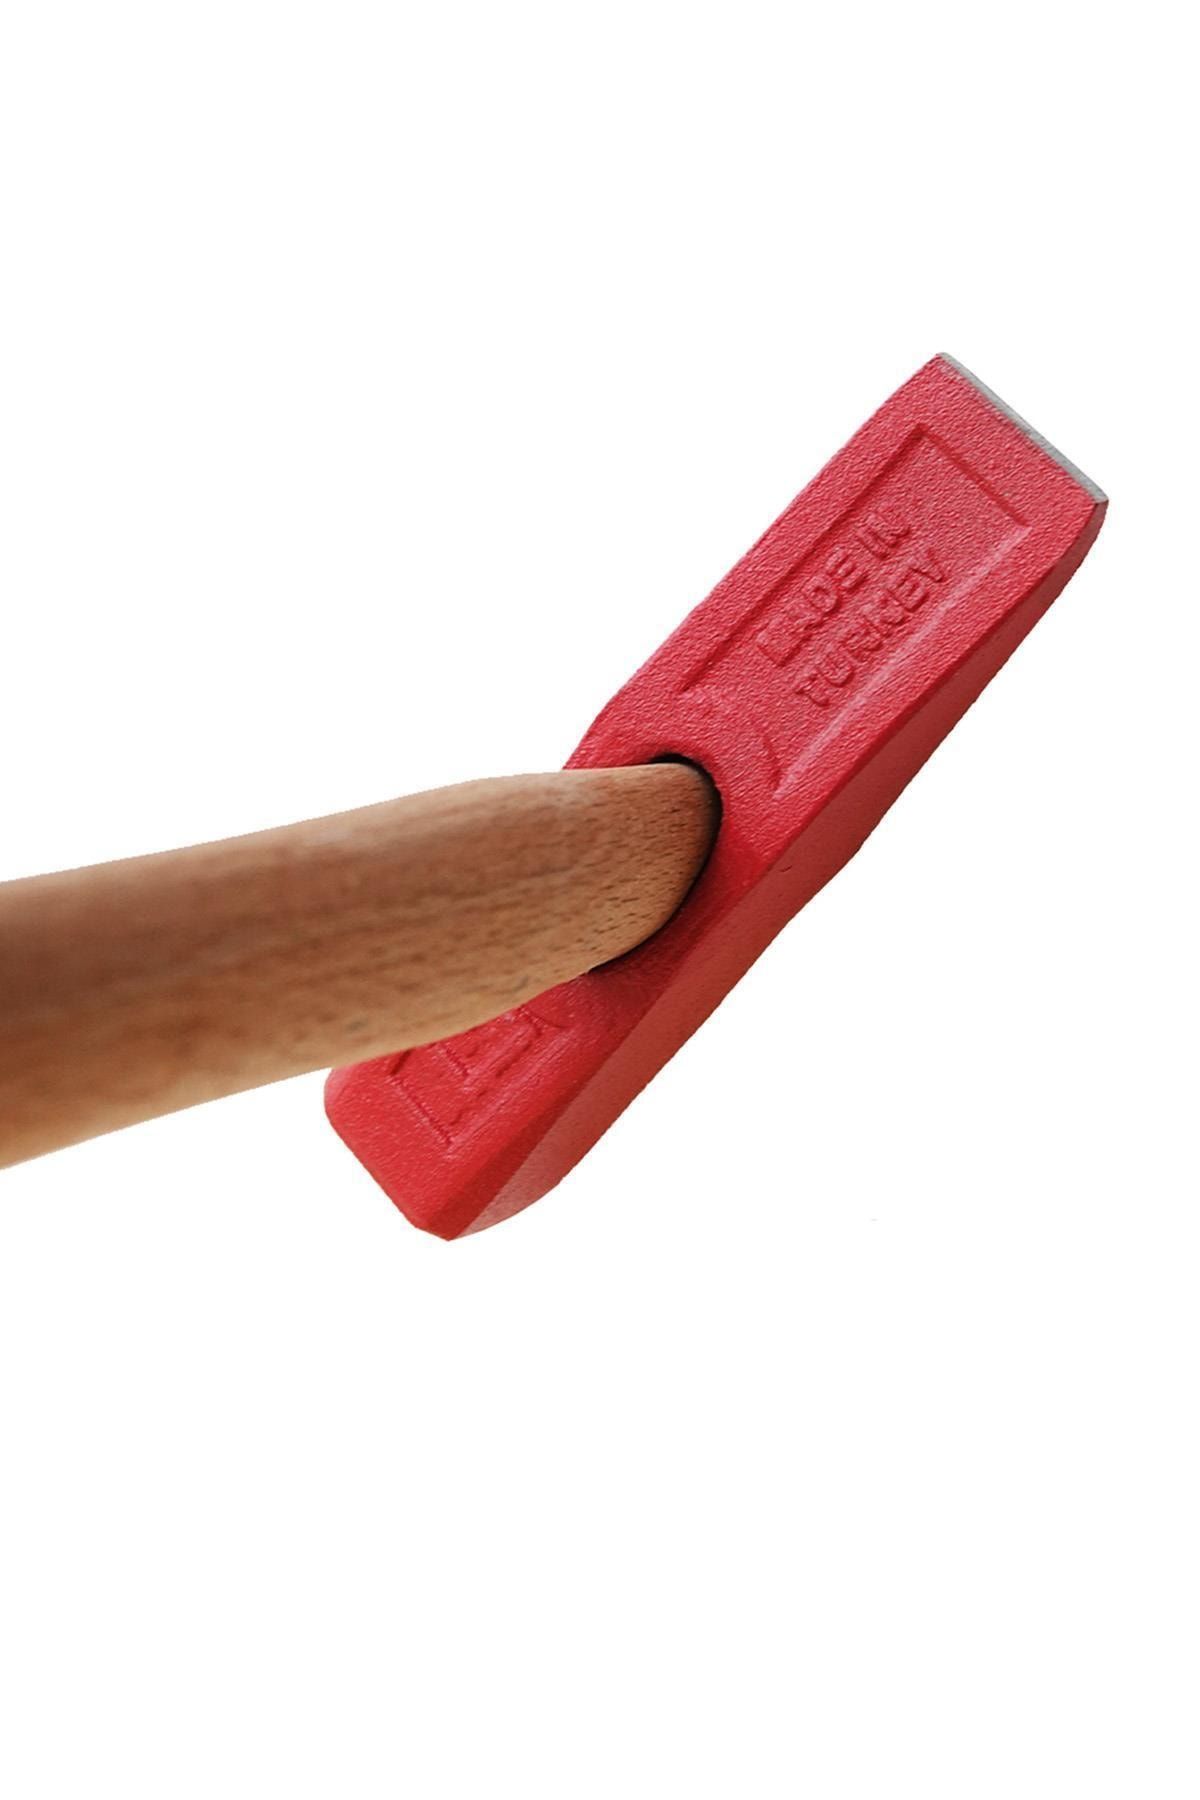 Rubber Scraper with Wooden Handle